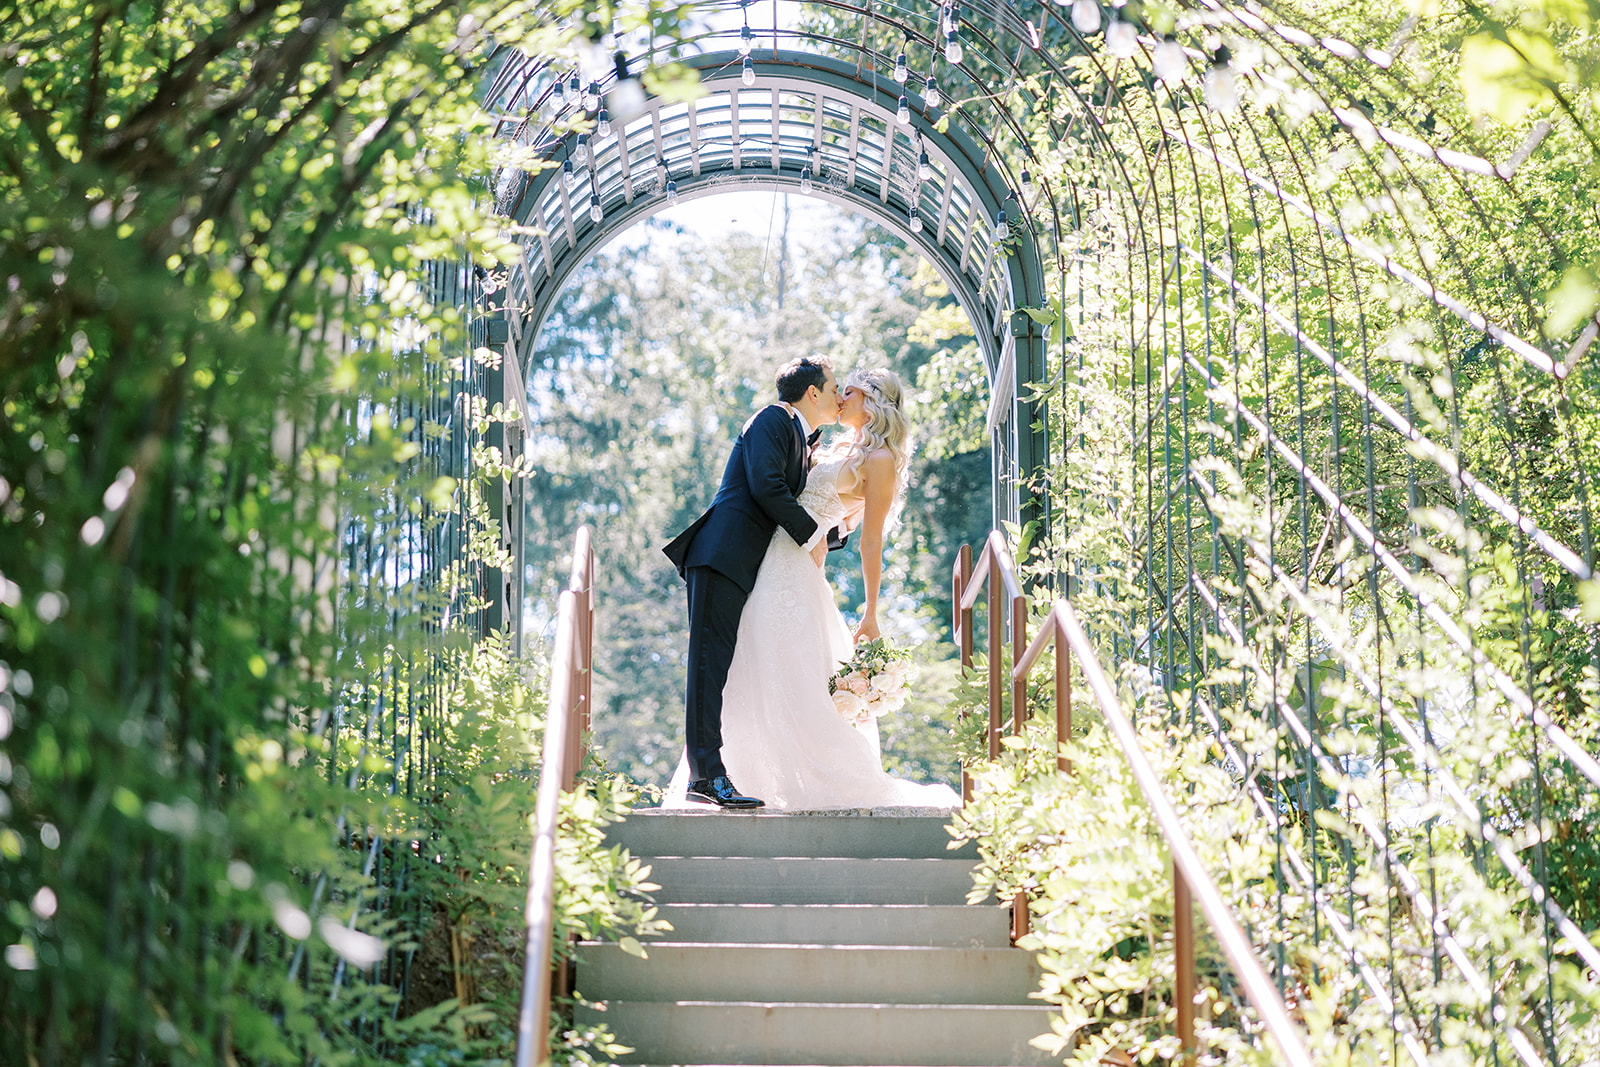 big kiss on outdoor staircase under garden arch